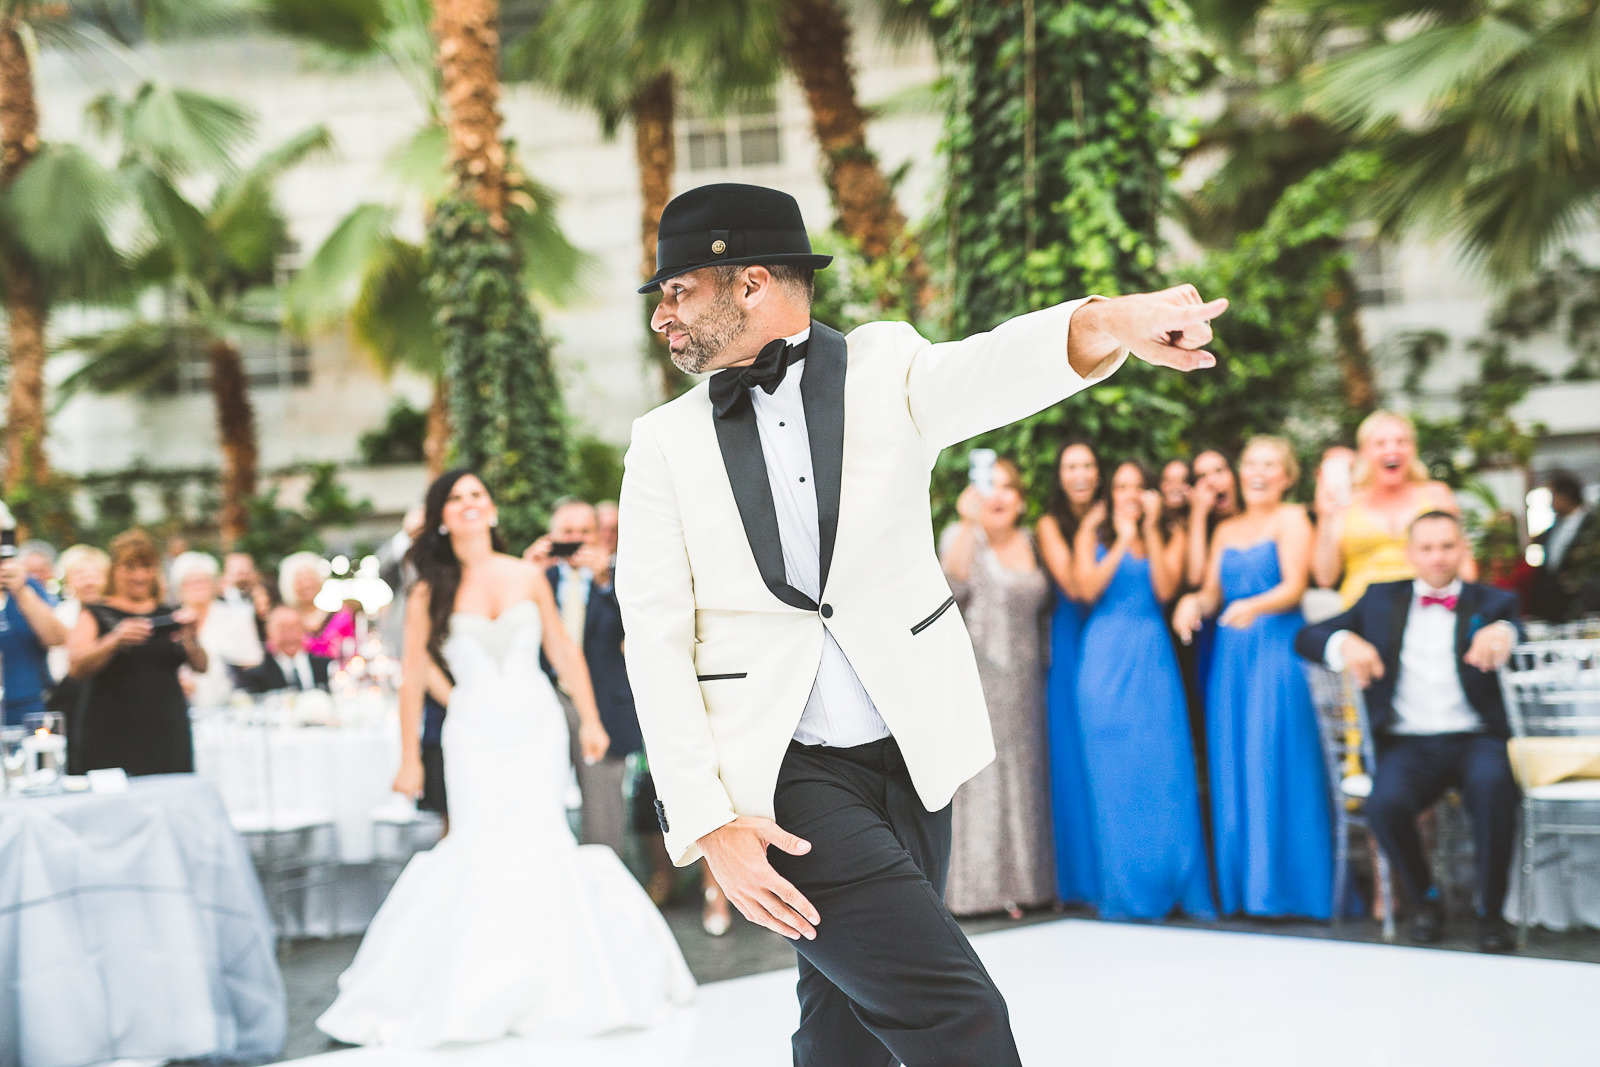 84 groom dance - Marisa + Chris // Chicago Wedding Photos at Navy Pier Crystal Garden